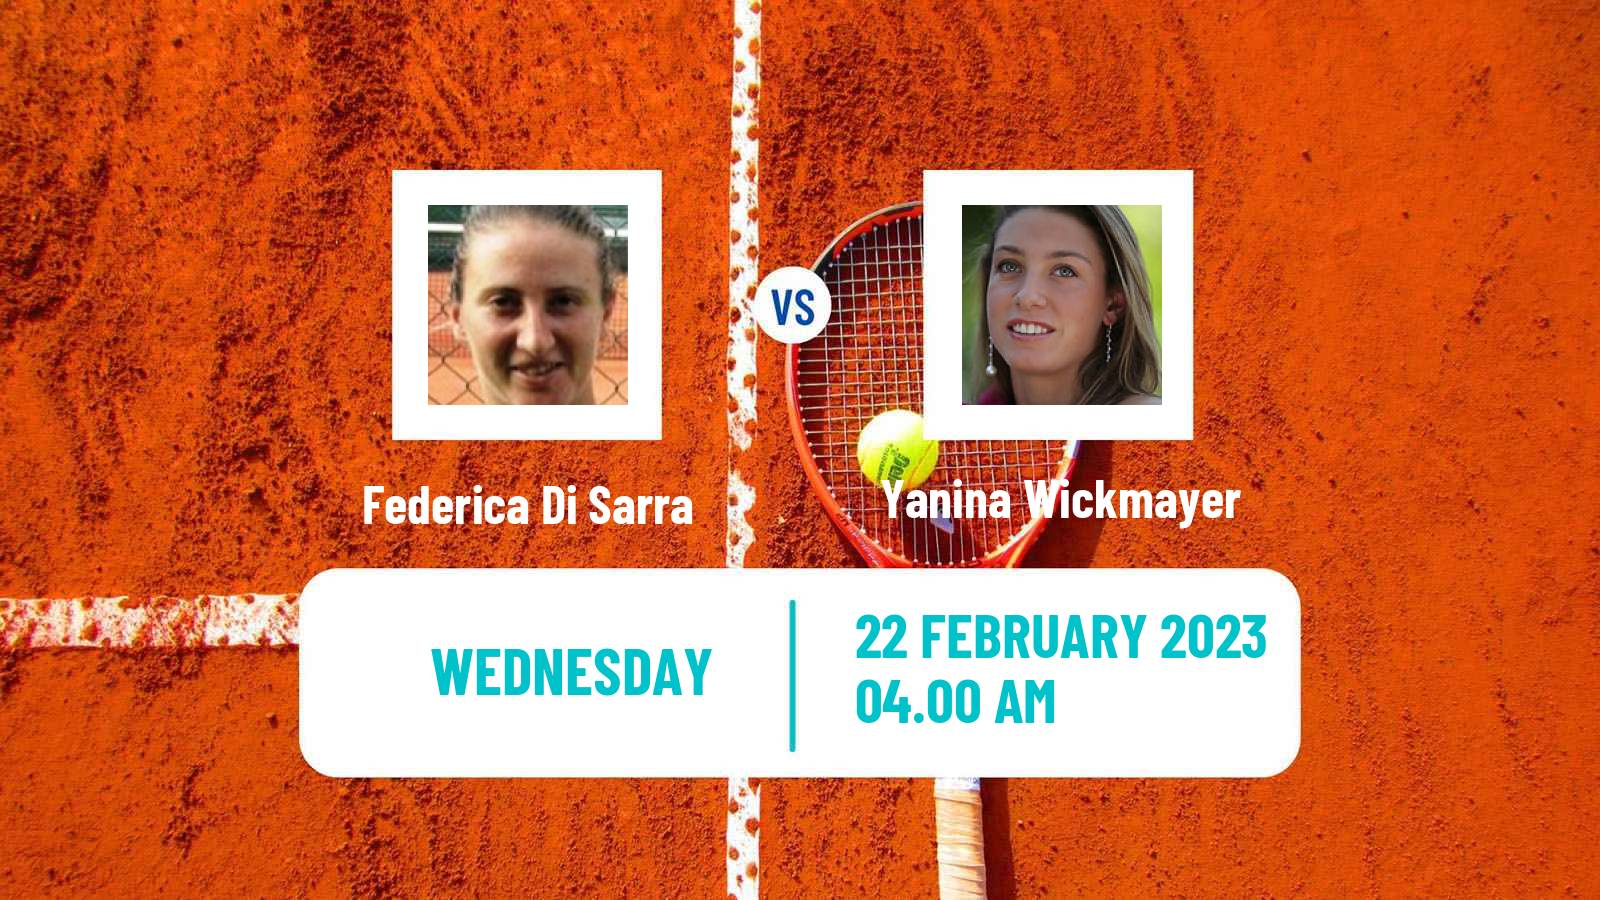 Tennis ITF Tournaments Federica Di Sarra - Yanina Wickmayer